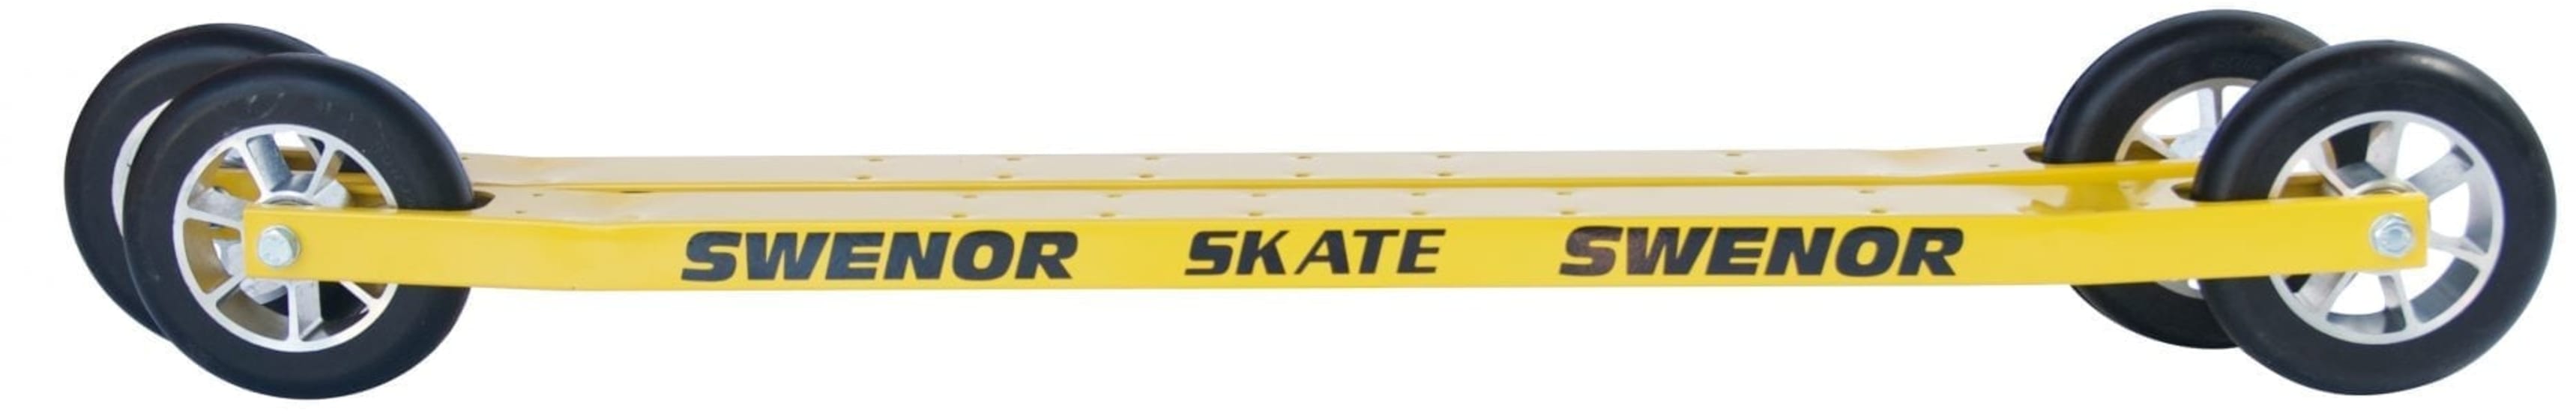 Swenor Skate Gul